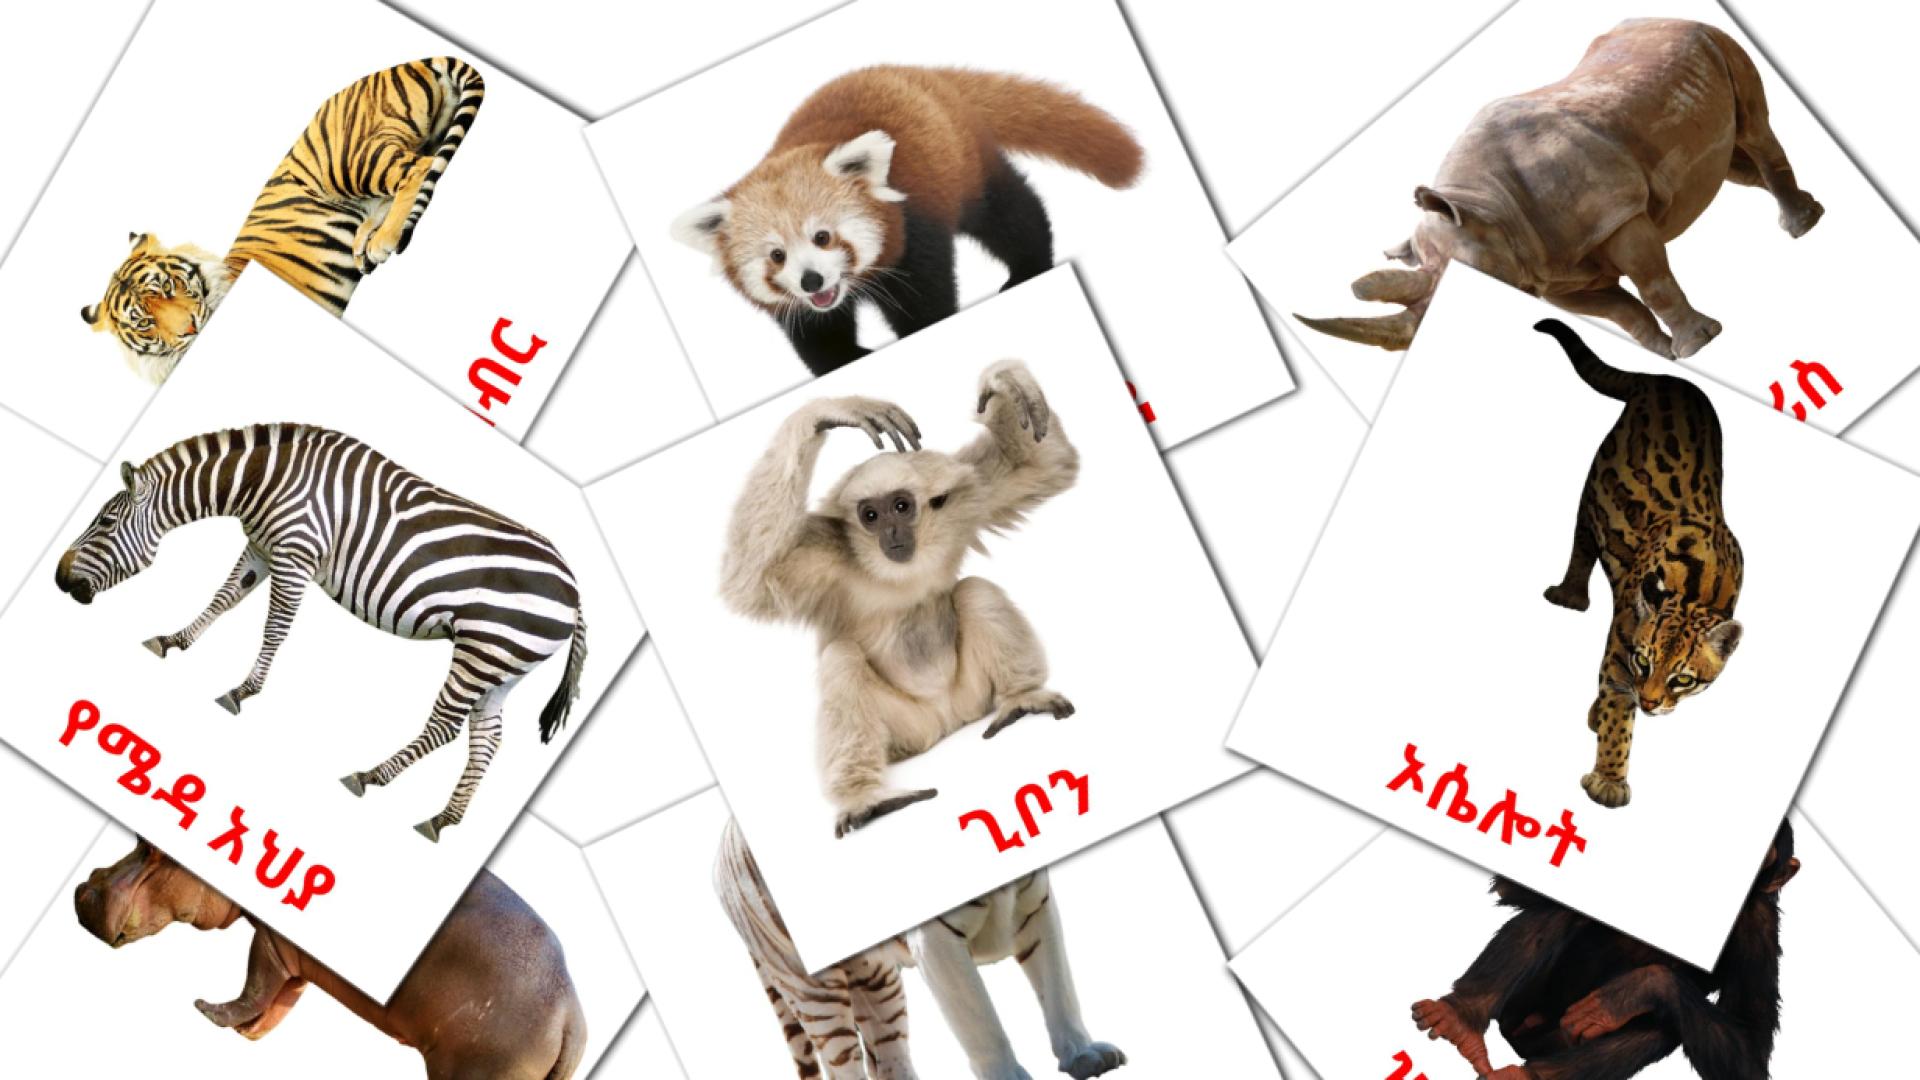 Jungle animals - amharic vocabulary cards